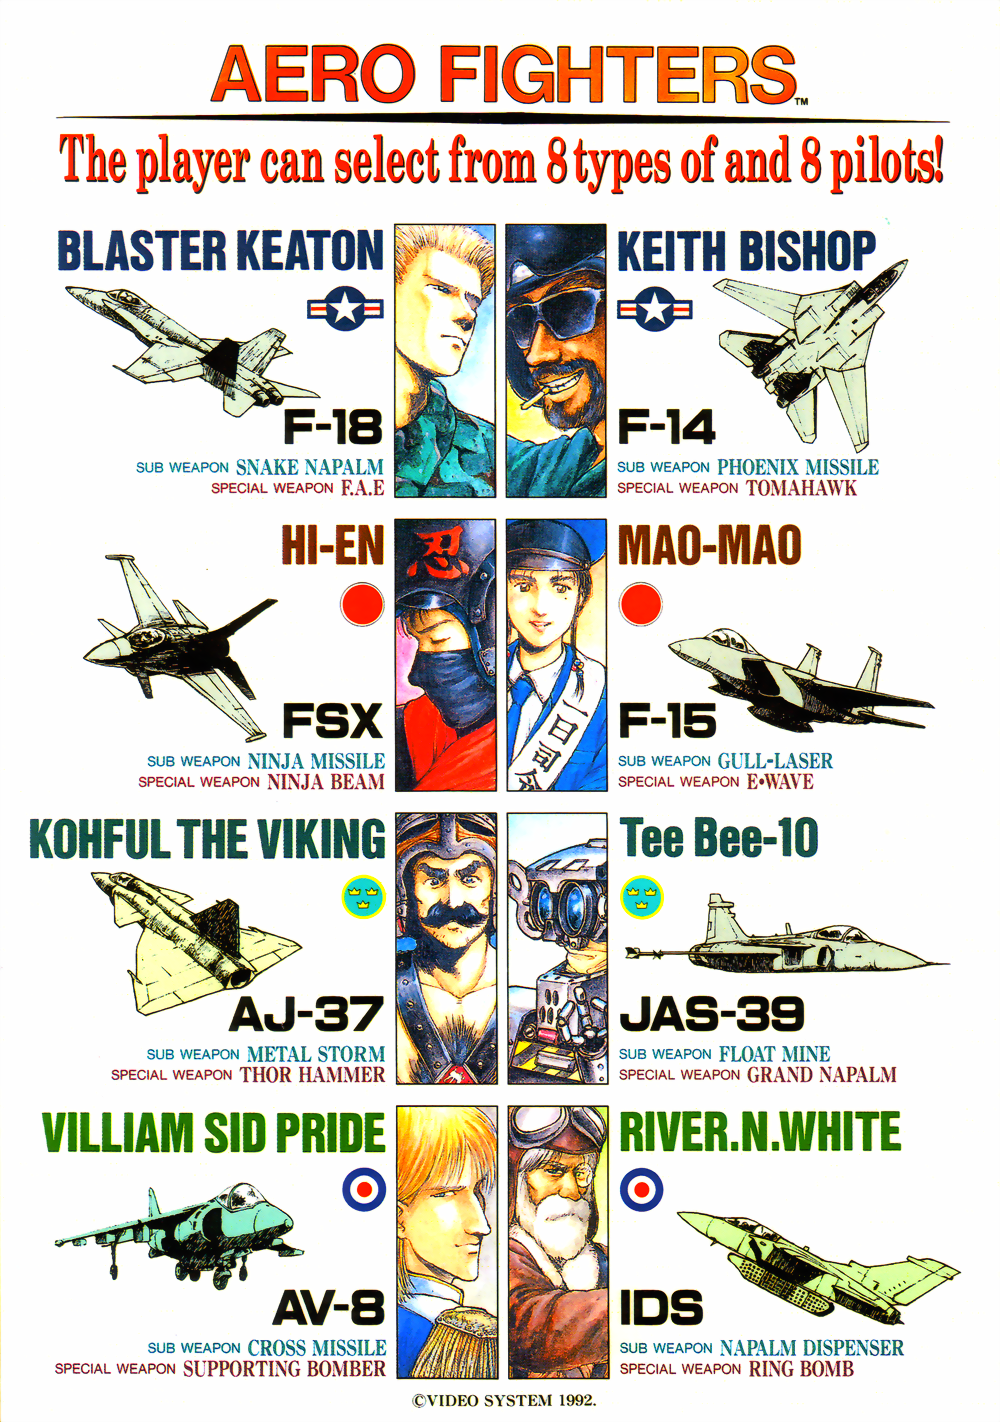 Aero Fighters (Taiwan / Japan, set 1) flyer